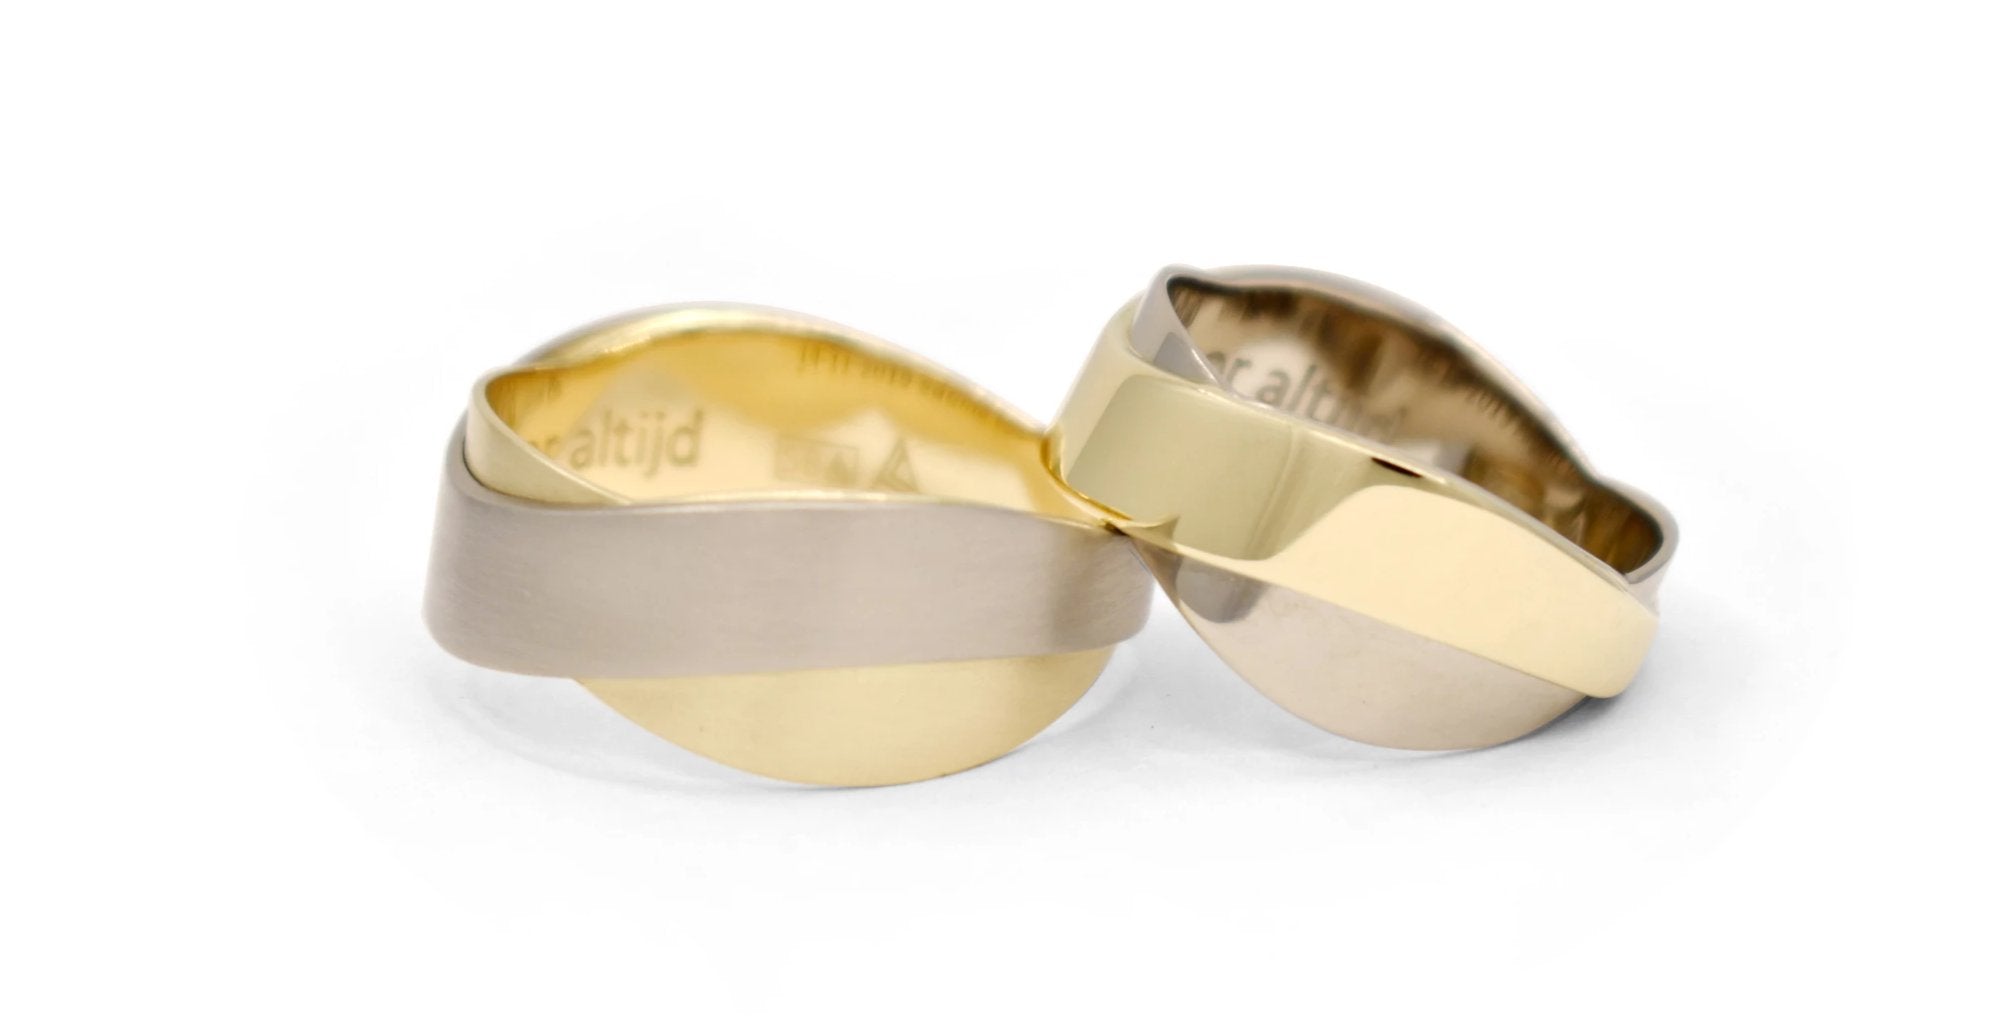 Dynamic wedding rings, custom made